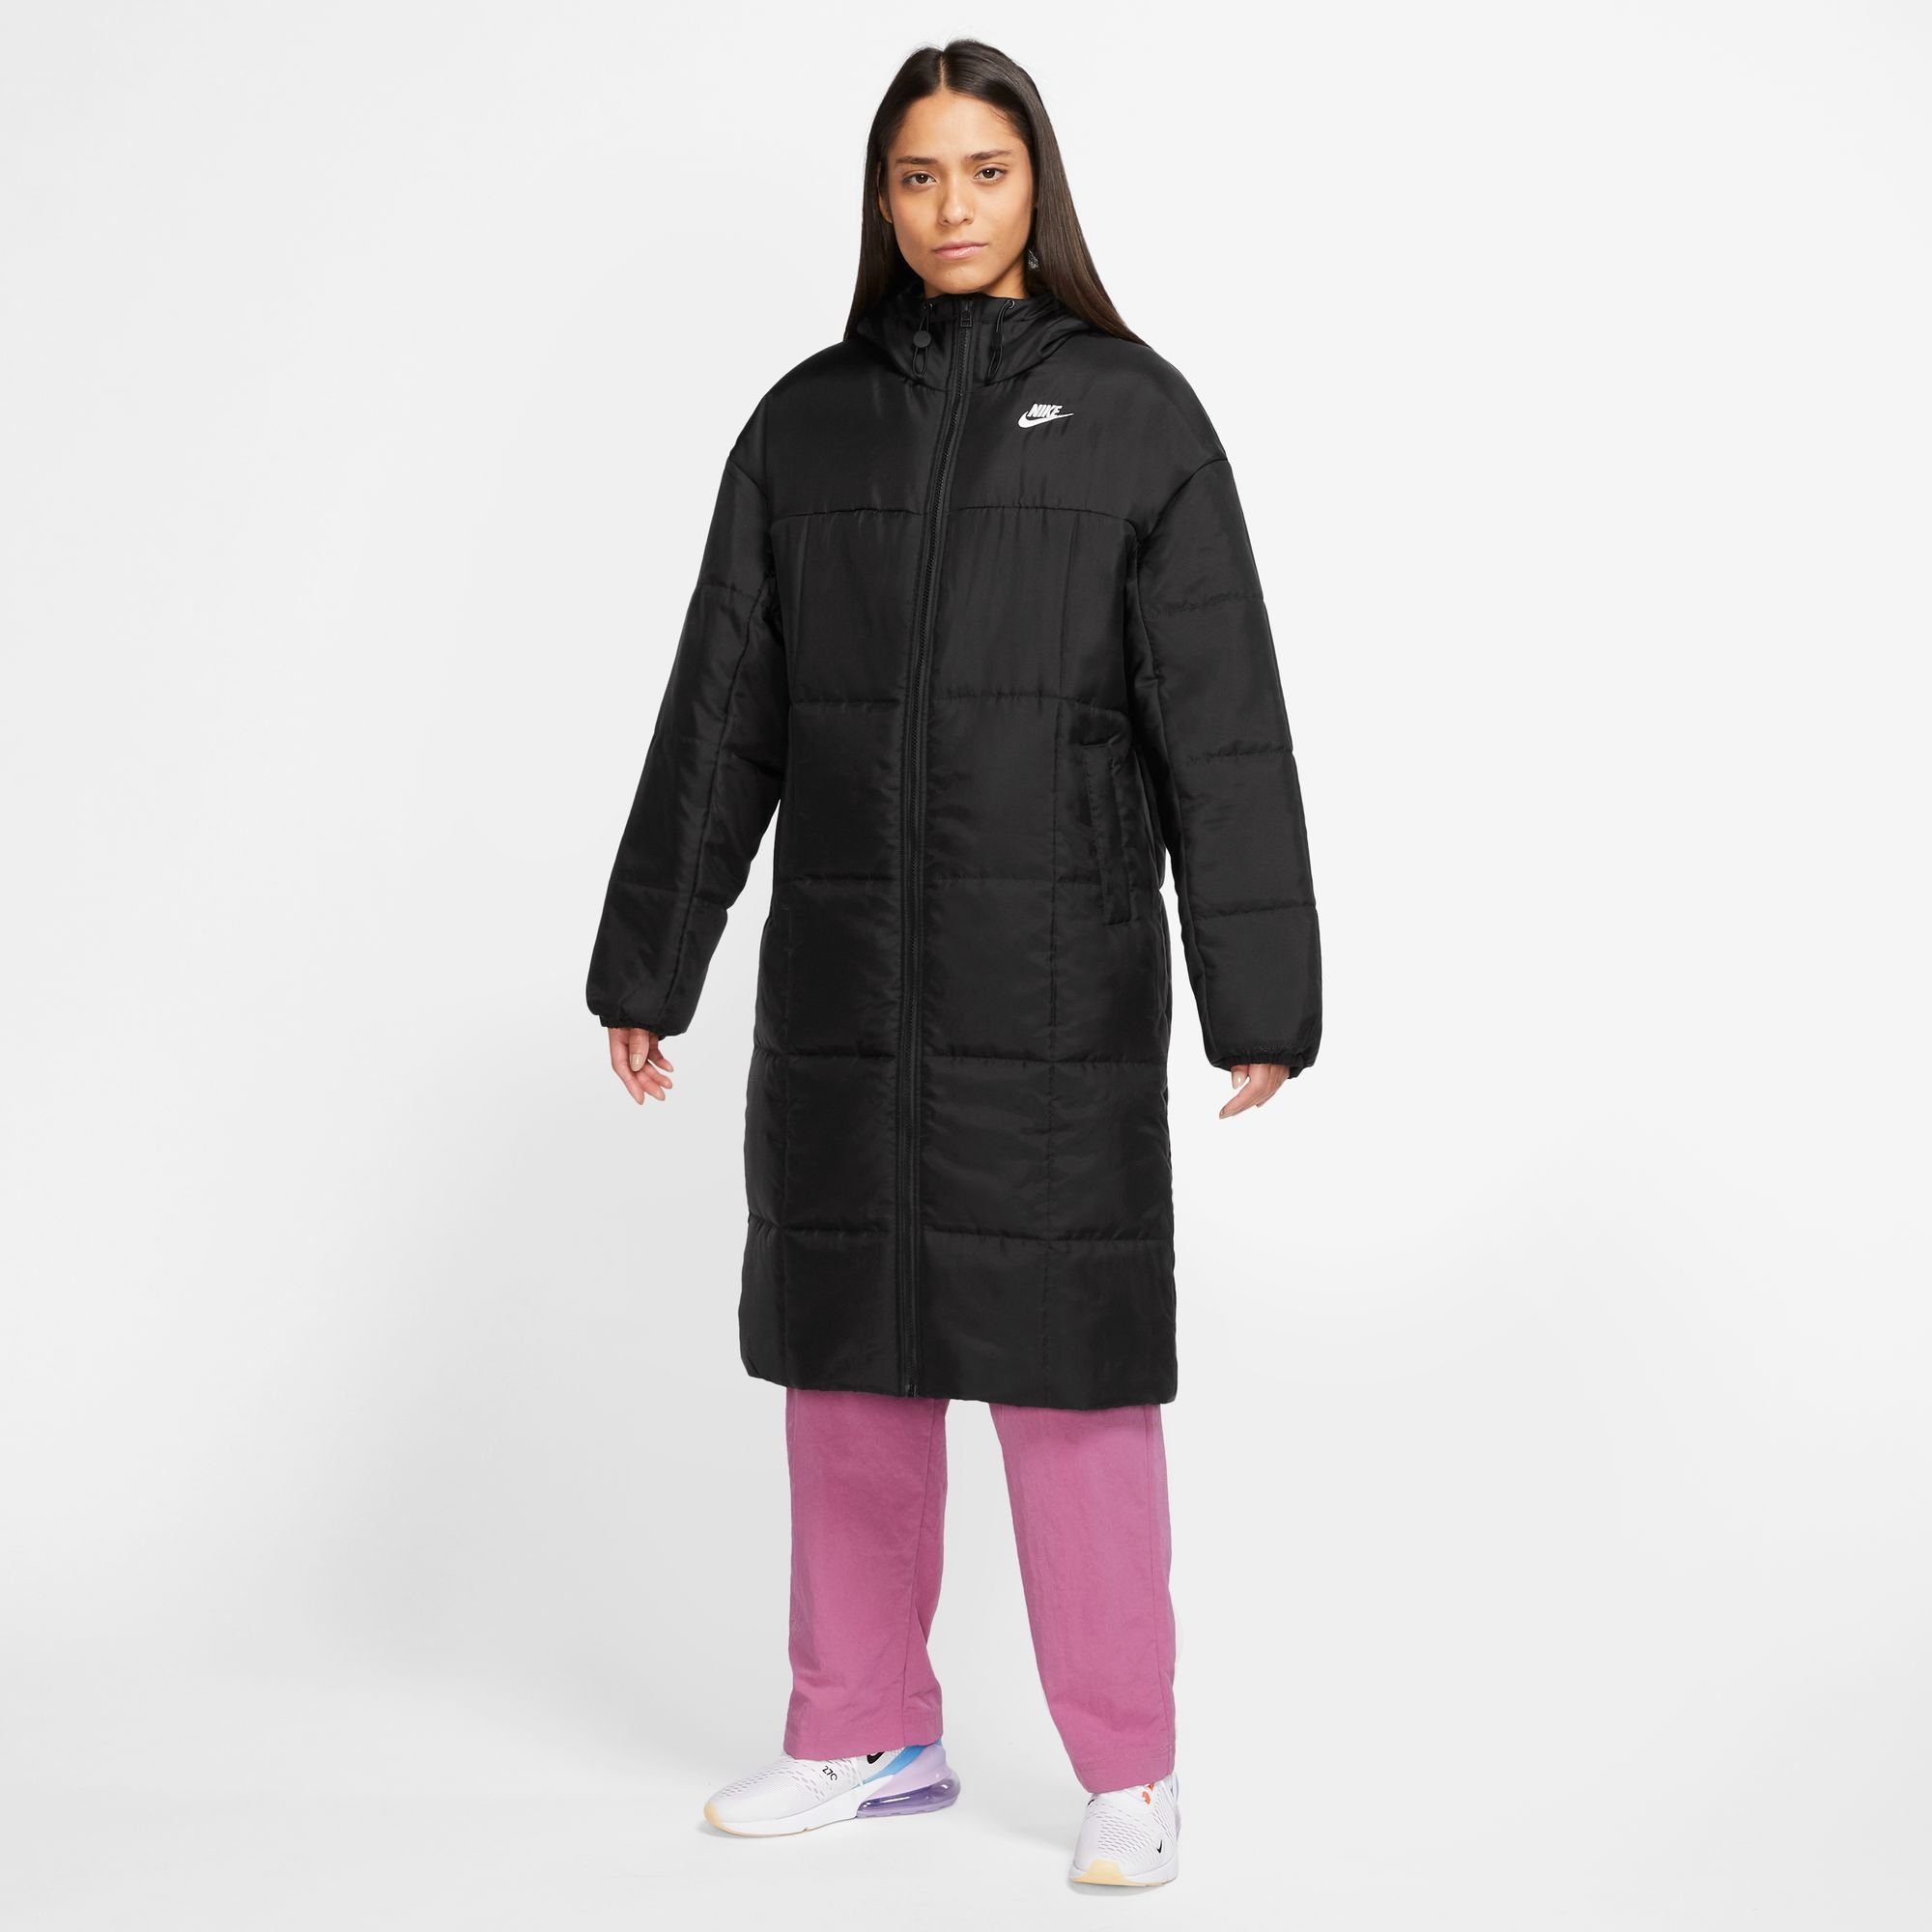 BLACK/WHITE PARKA Steppmantel THERMA-FIT CLASSIC Sportswear WOMEN'S Nike